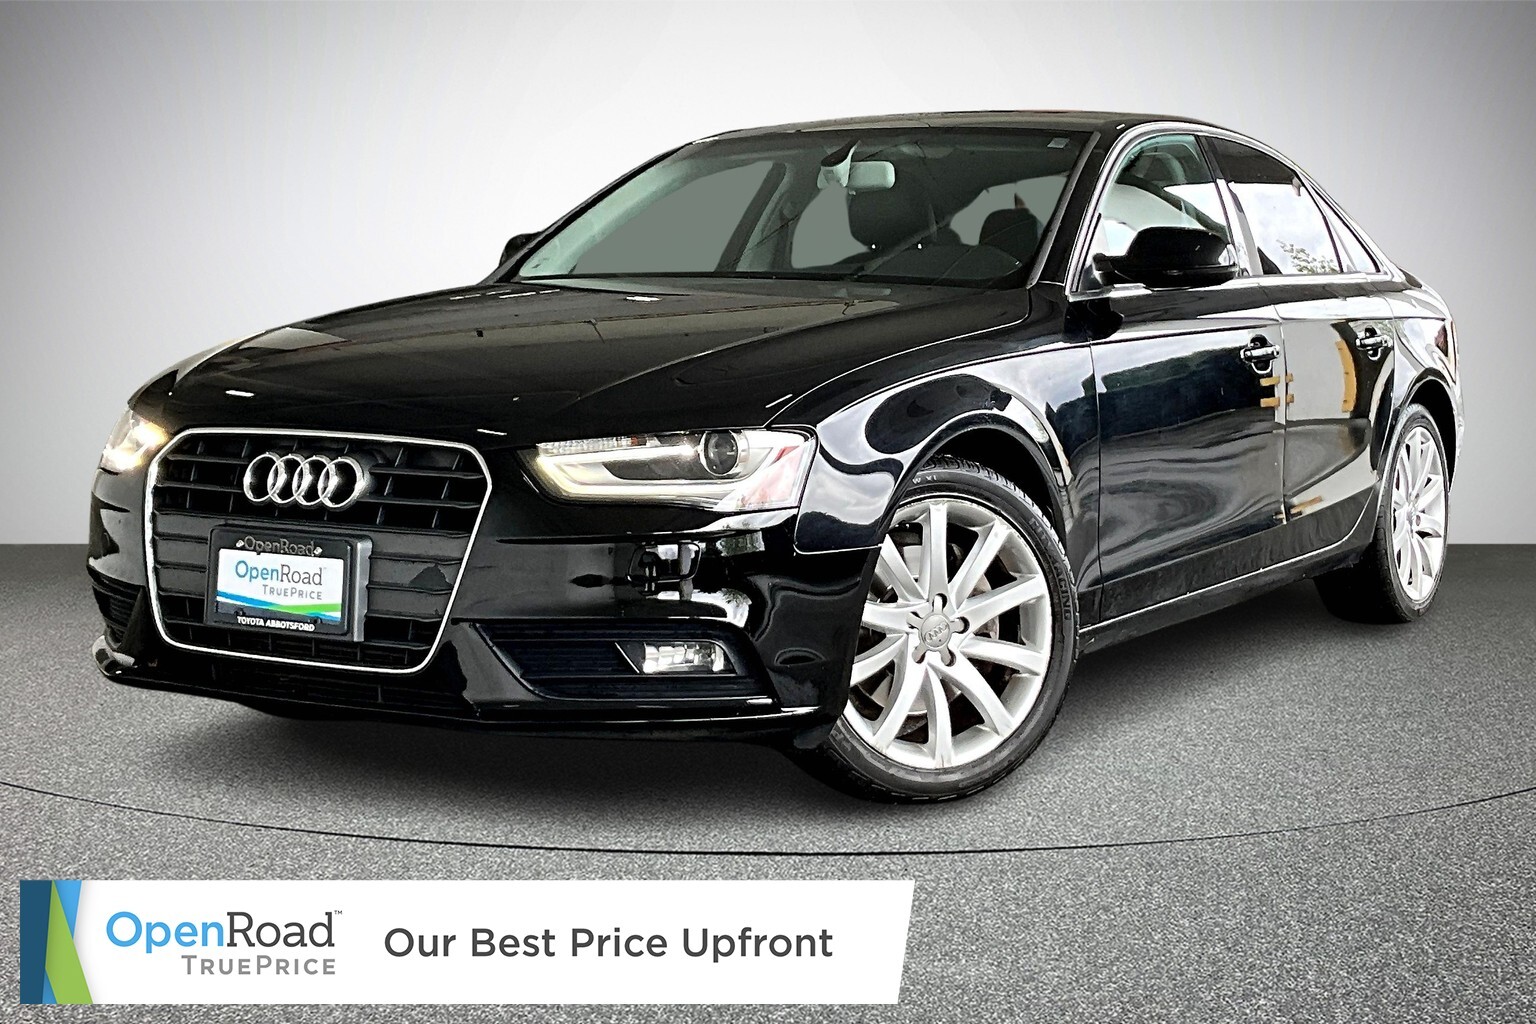 2014 Audi A4 4dr Sdn Auto Komfort FrontTrak $245.96 bi-weekly